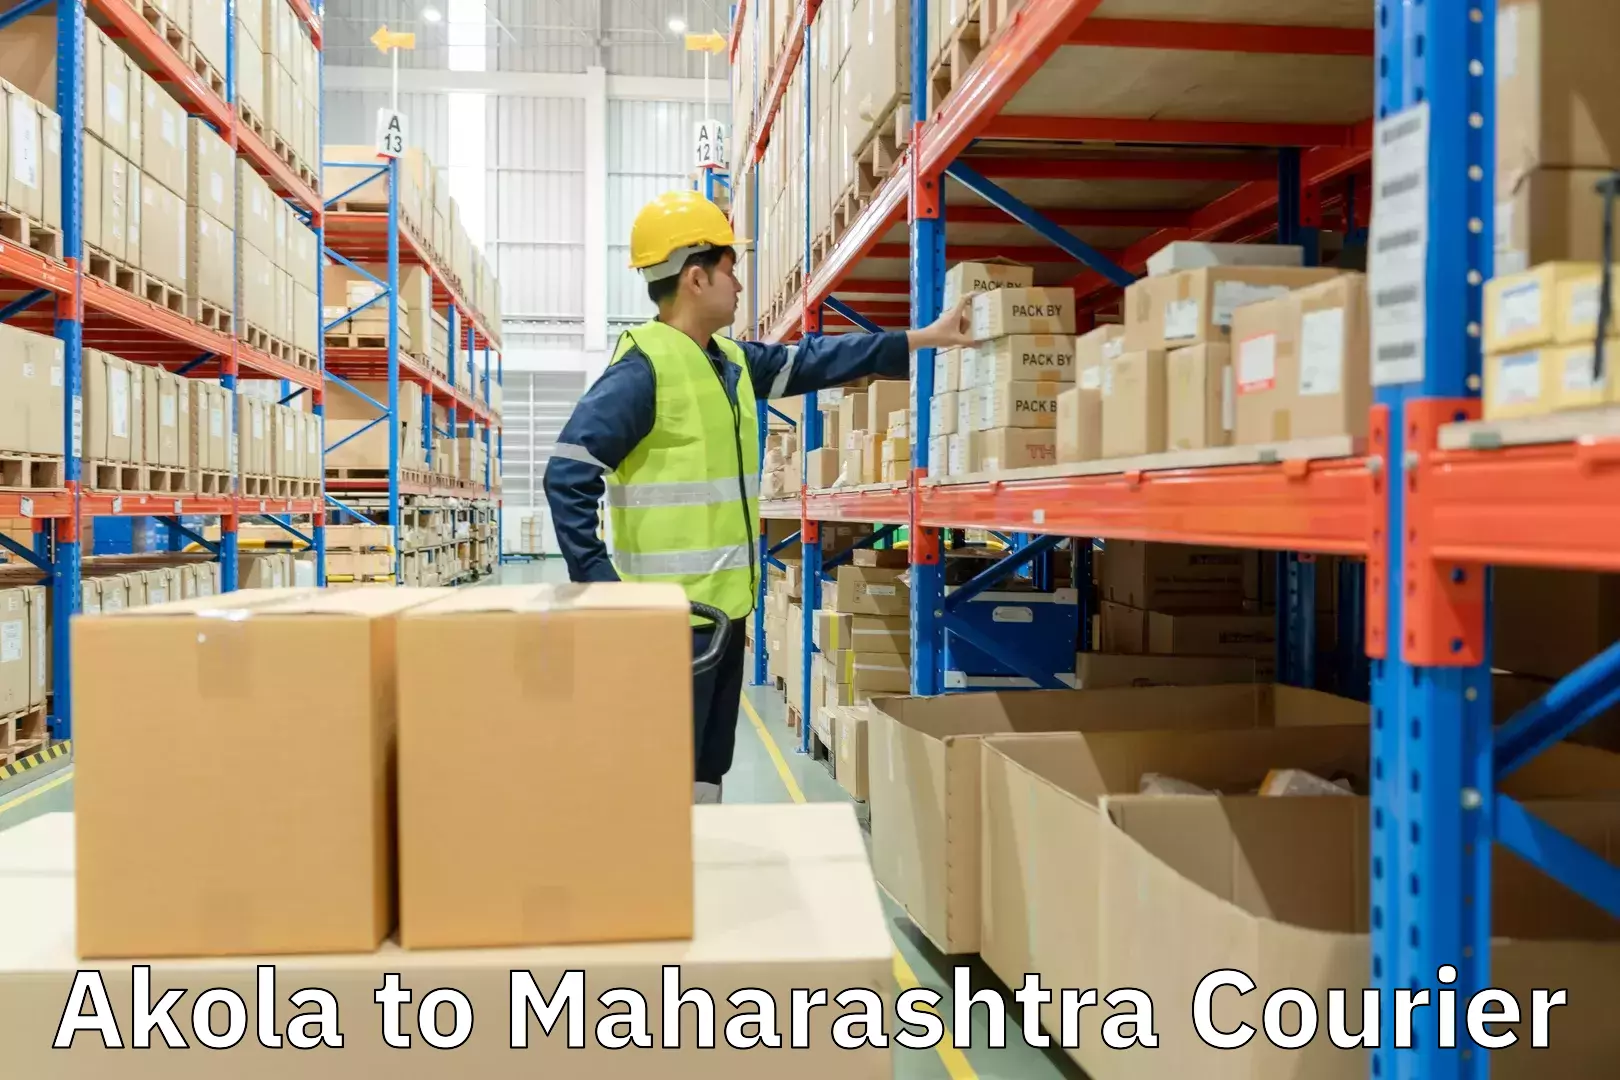 Global logistics network Akola to Maharashtra